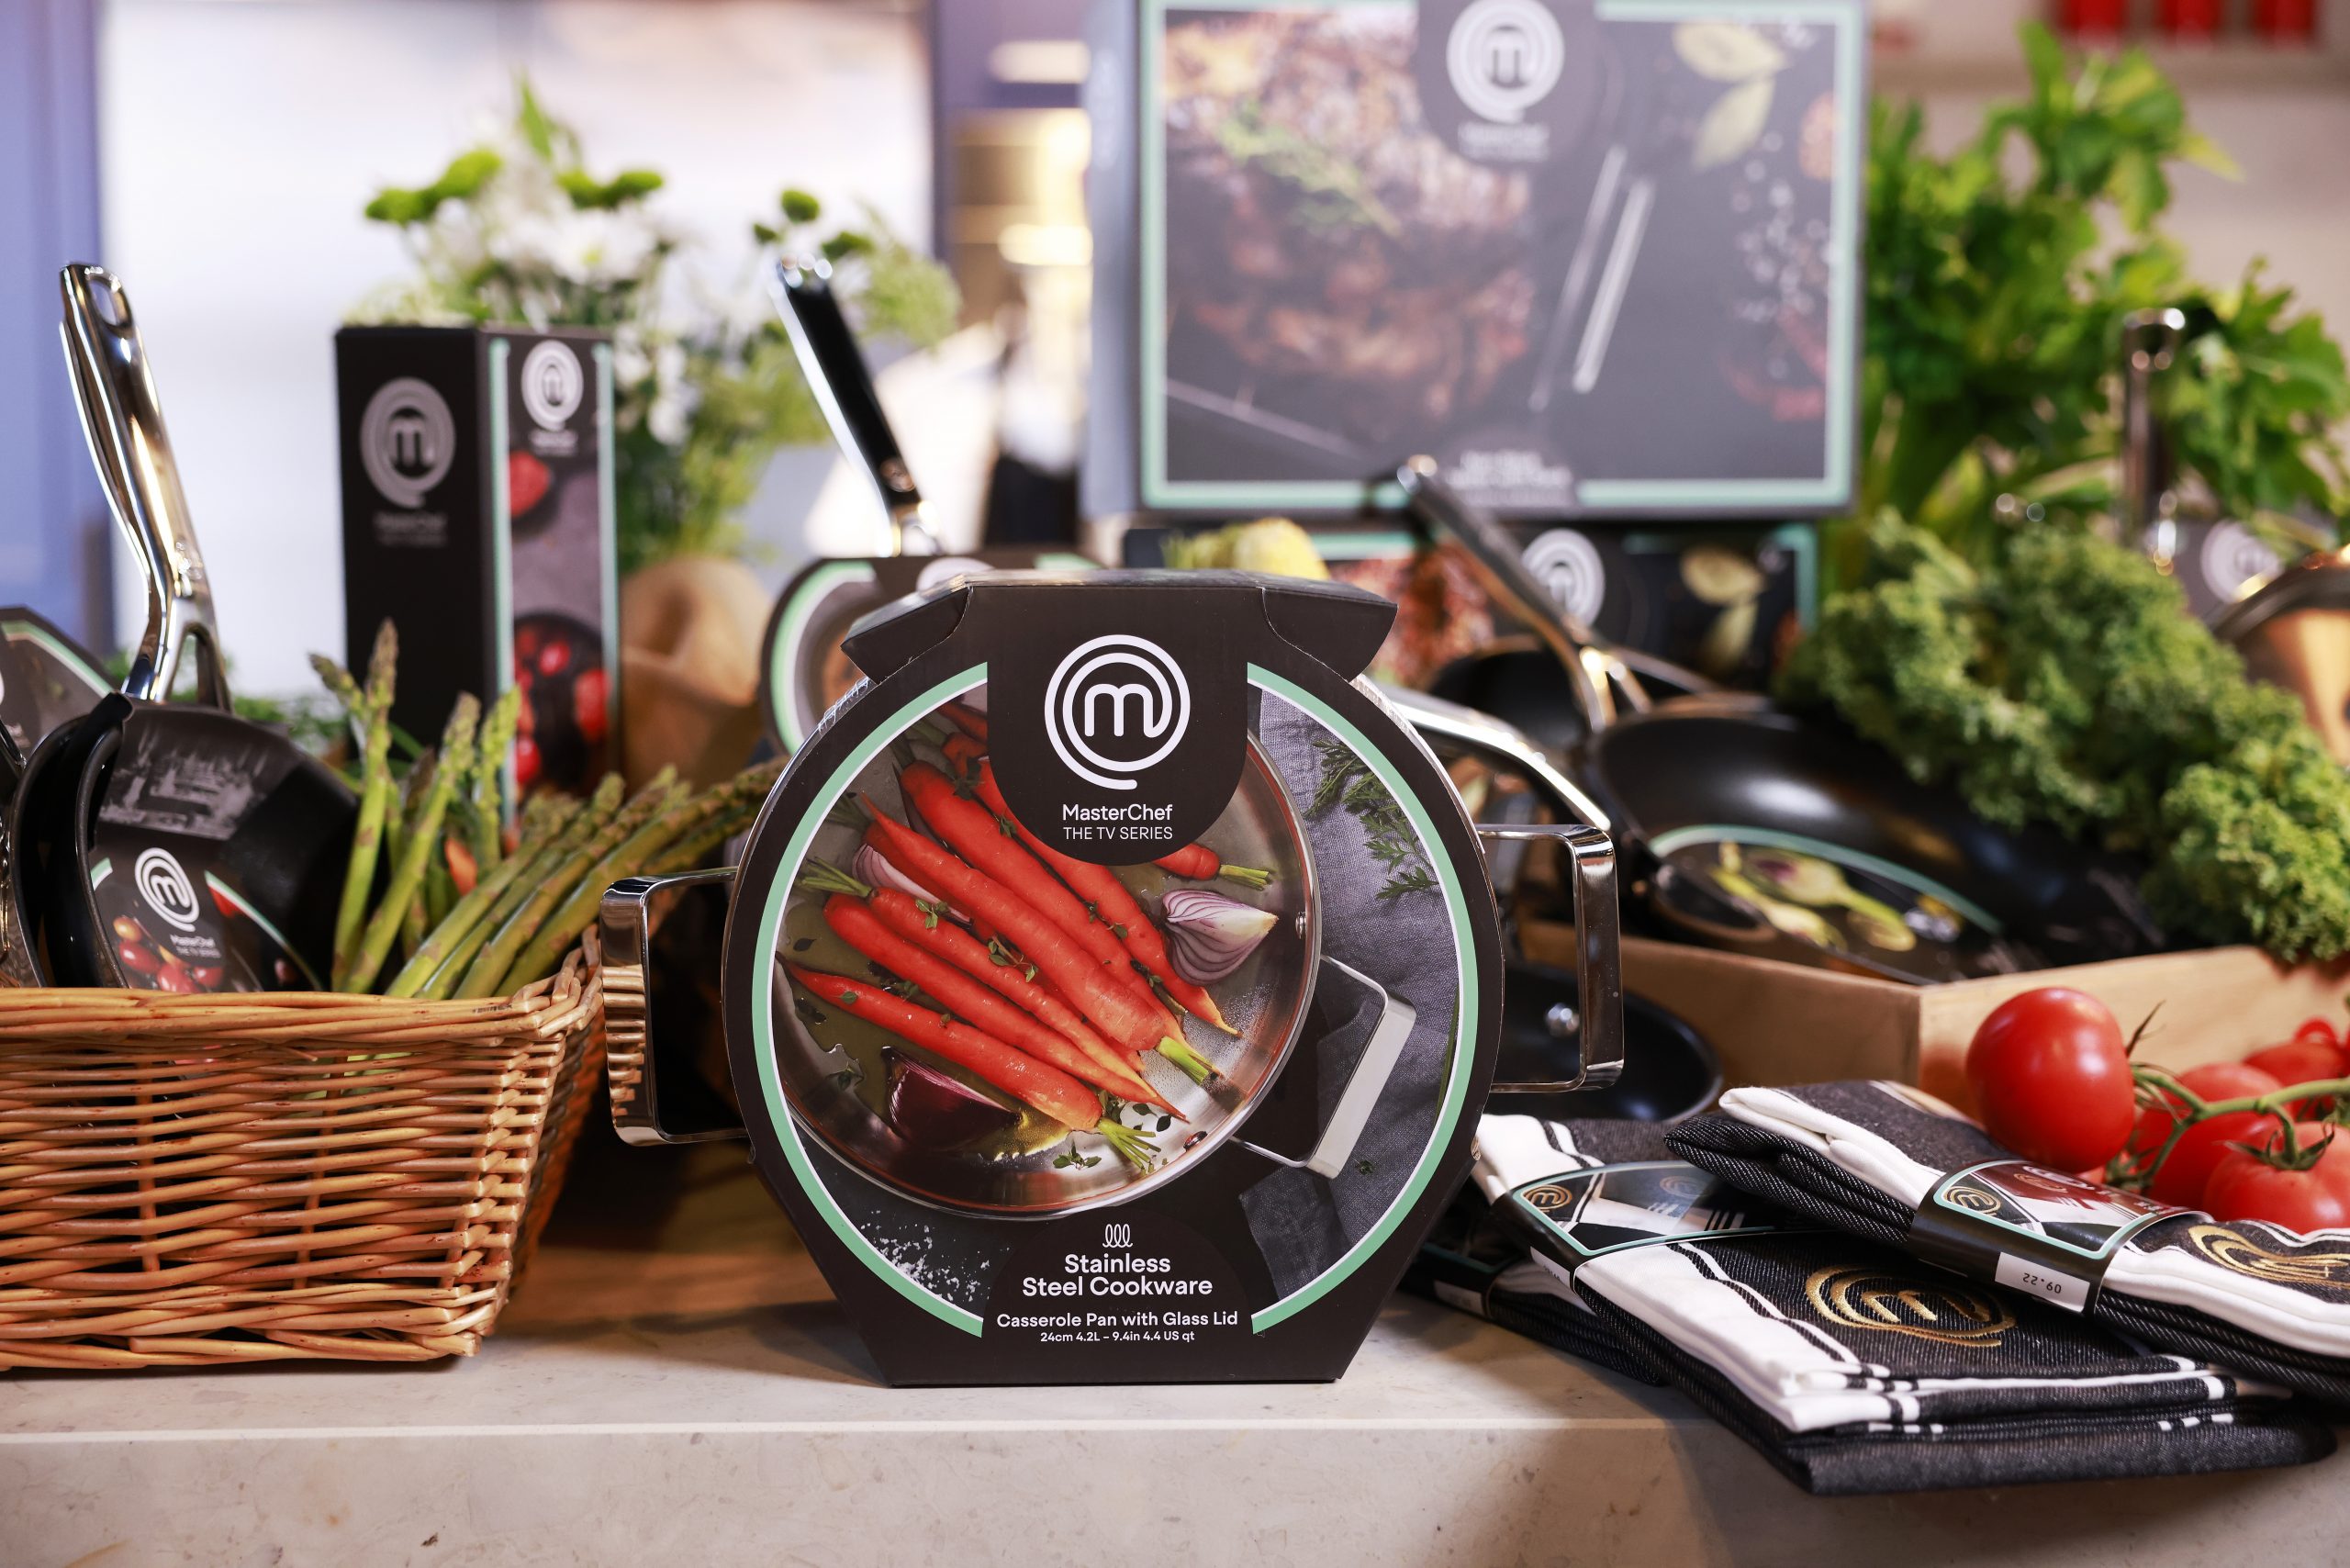 Coles offering MasterChef cookware - Retail World Magazine